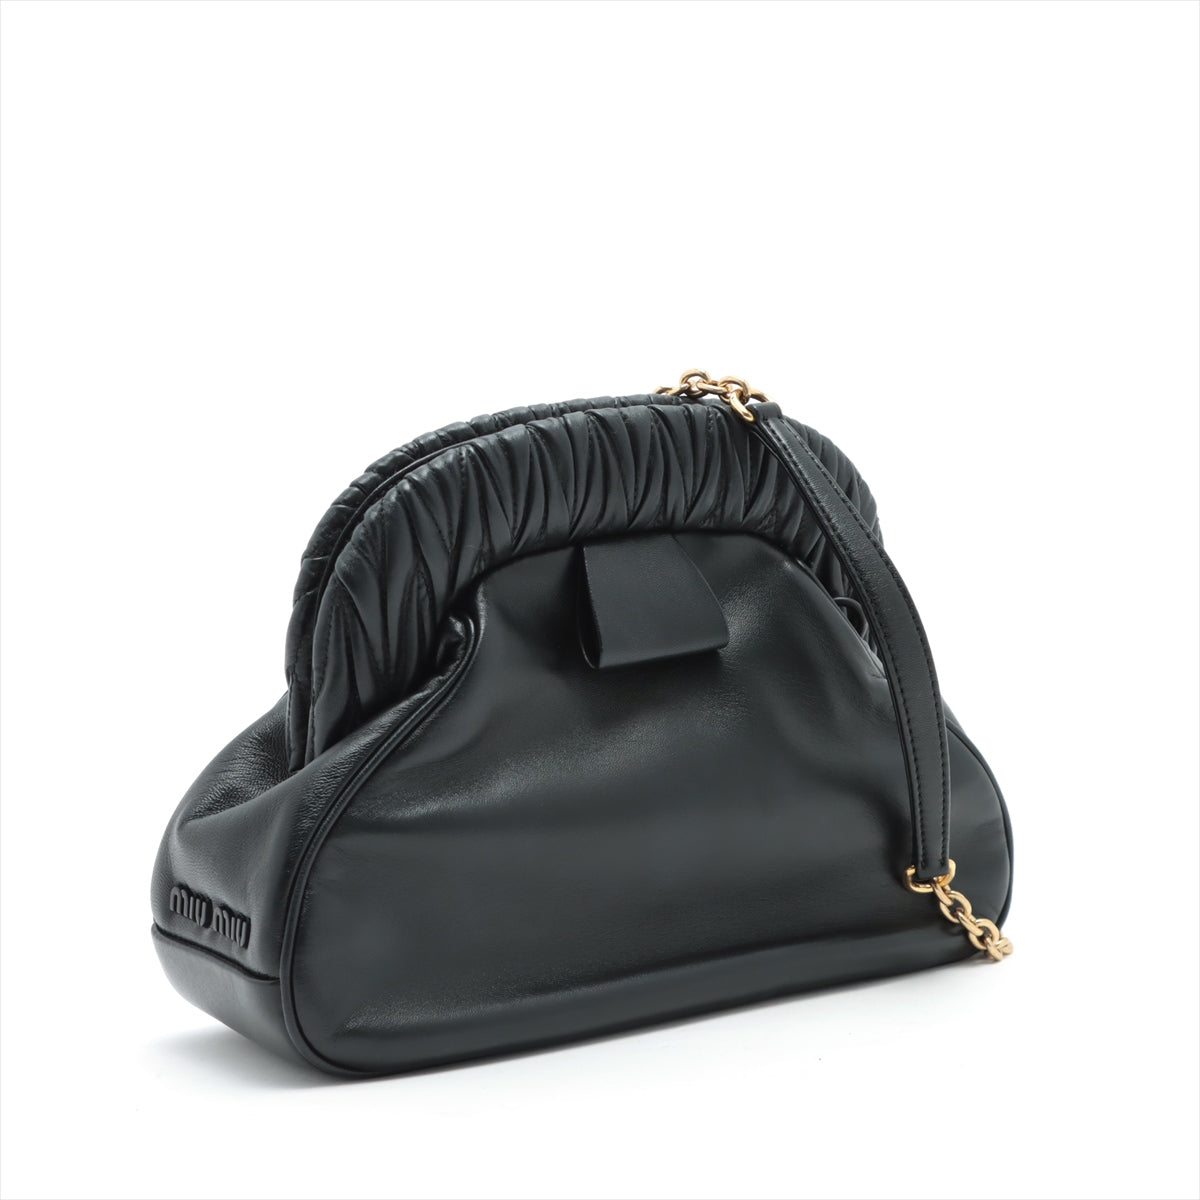 Miu Miu clutch bag - Women's handbags